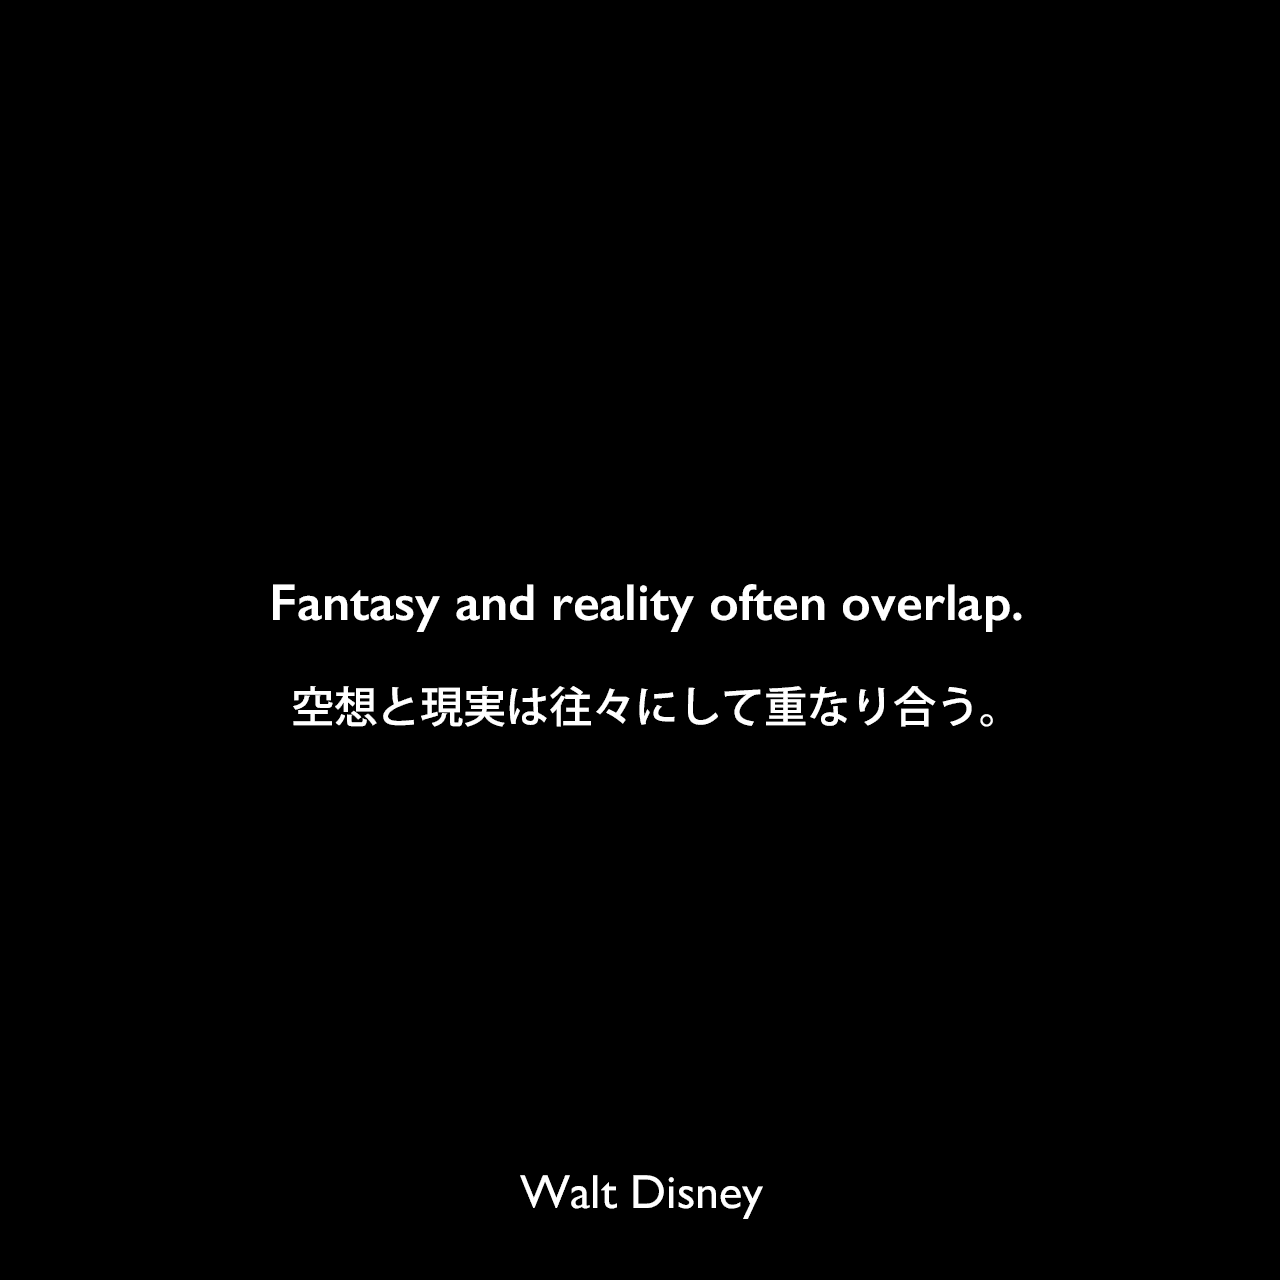 Fantasy and reality often overlap.空想と現実は往々にして重なり合う。Walt Disney